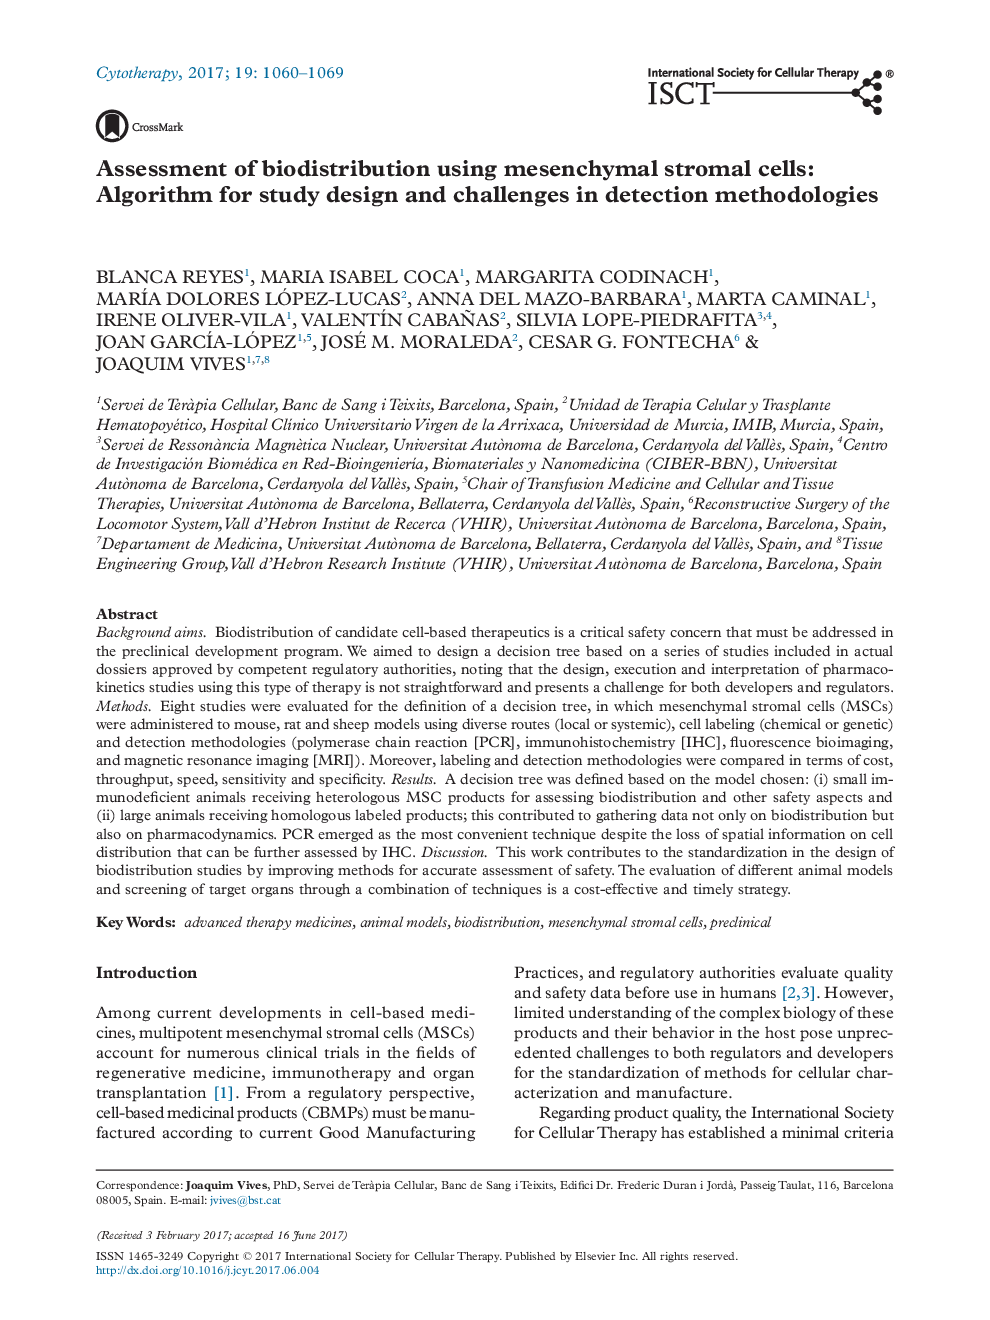 Assessment of biodistribution using mesenchymal stromal cells: Algorithm for study design and challenges in detection methodologies